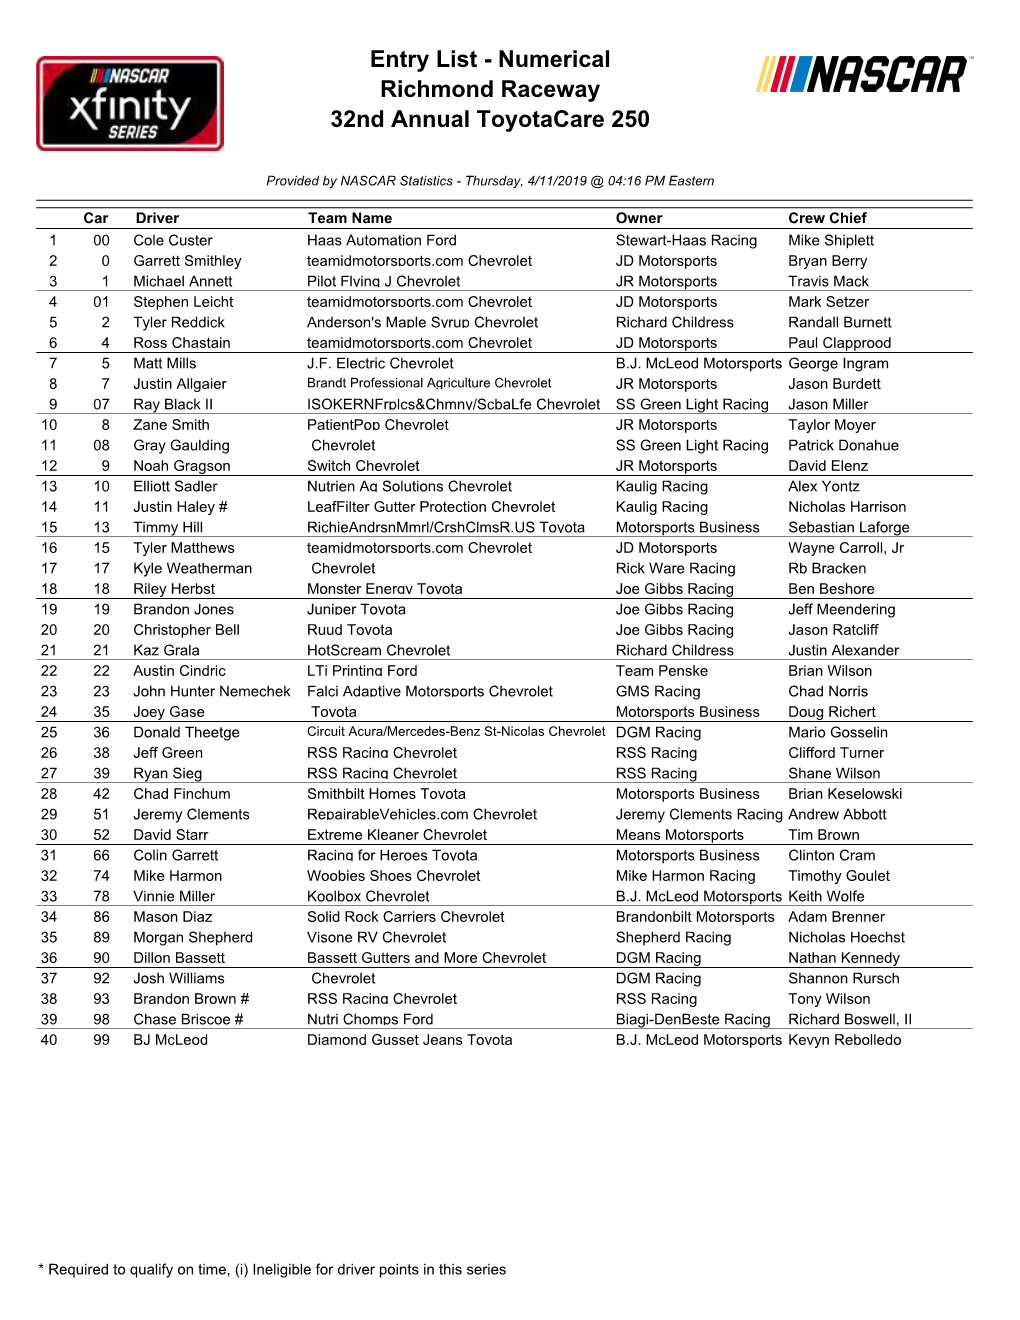 Entry List - Numerical Richmond Raceway 32Nd Annual Toyotacare 250